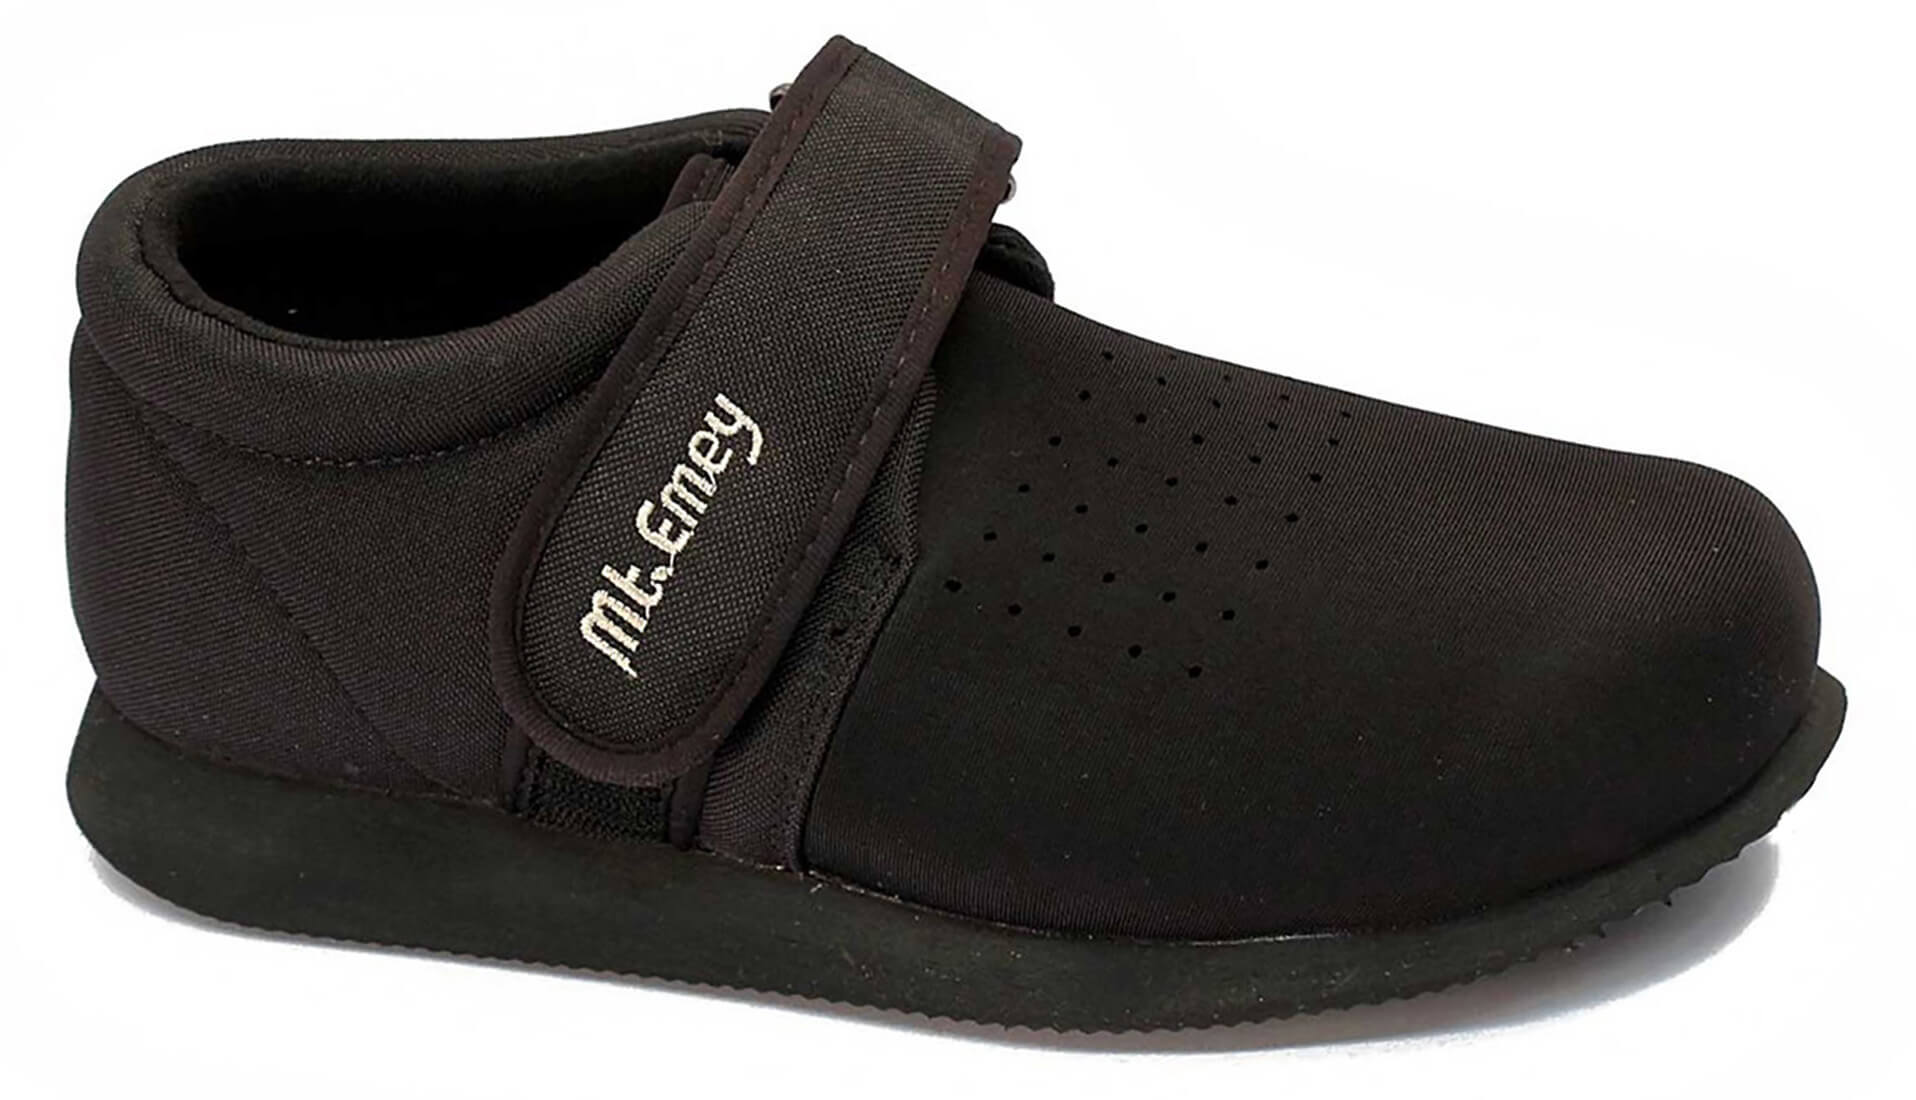 Apis Mt. Emey 737 Men's Post-Op Shoe - Men's Comfort Therapeutic Shoe - Extra Depth For Orthotics - Extra Wide